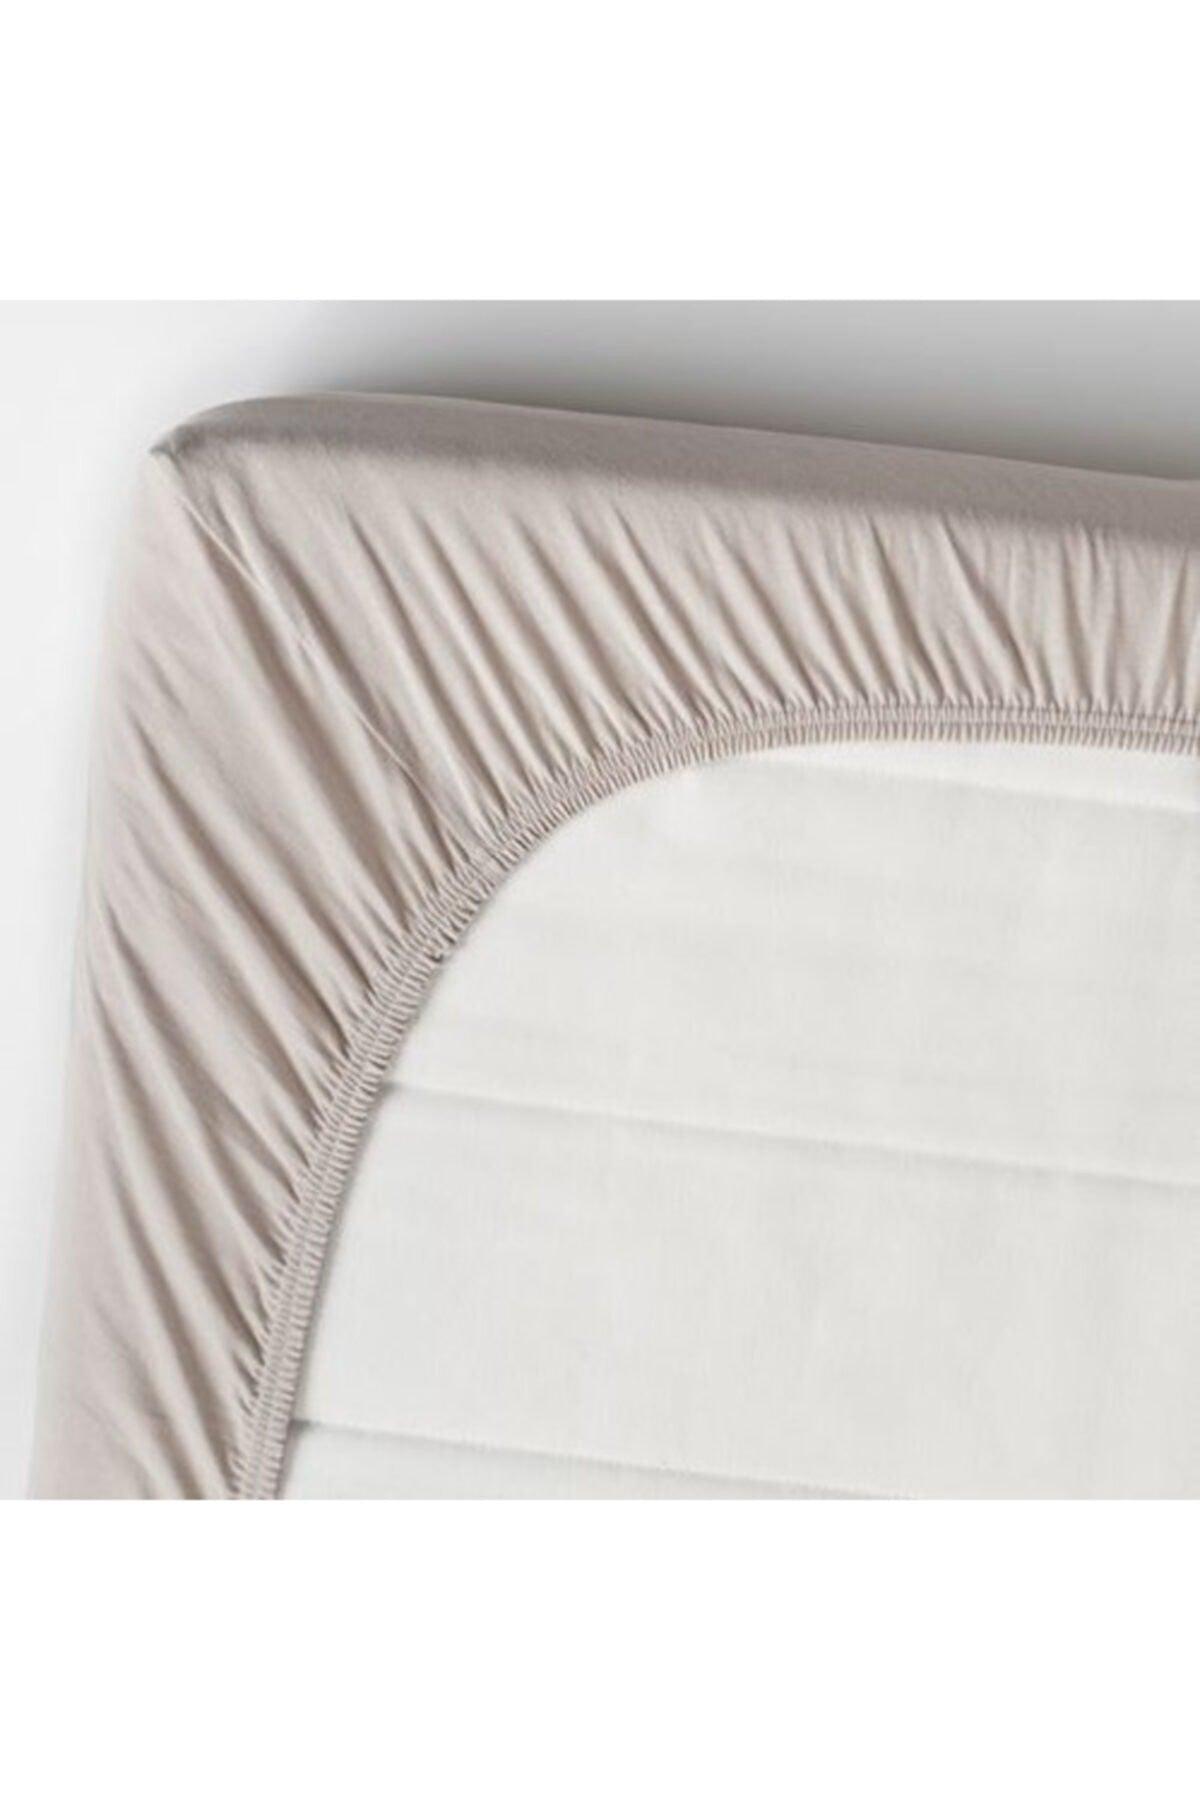 Beige Double Cotton Elastic Bed Sheet 160x200 Cm Anmçkpnyecru - Swordslife